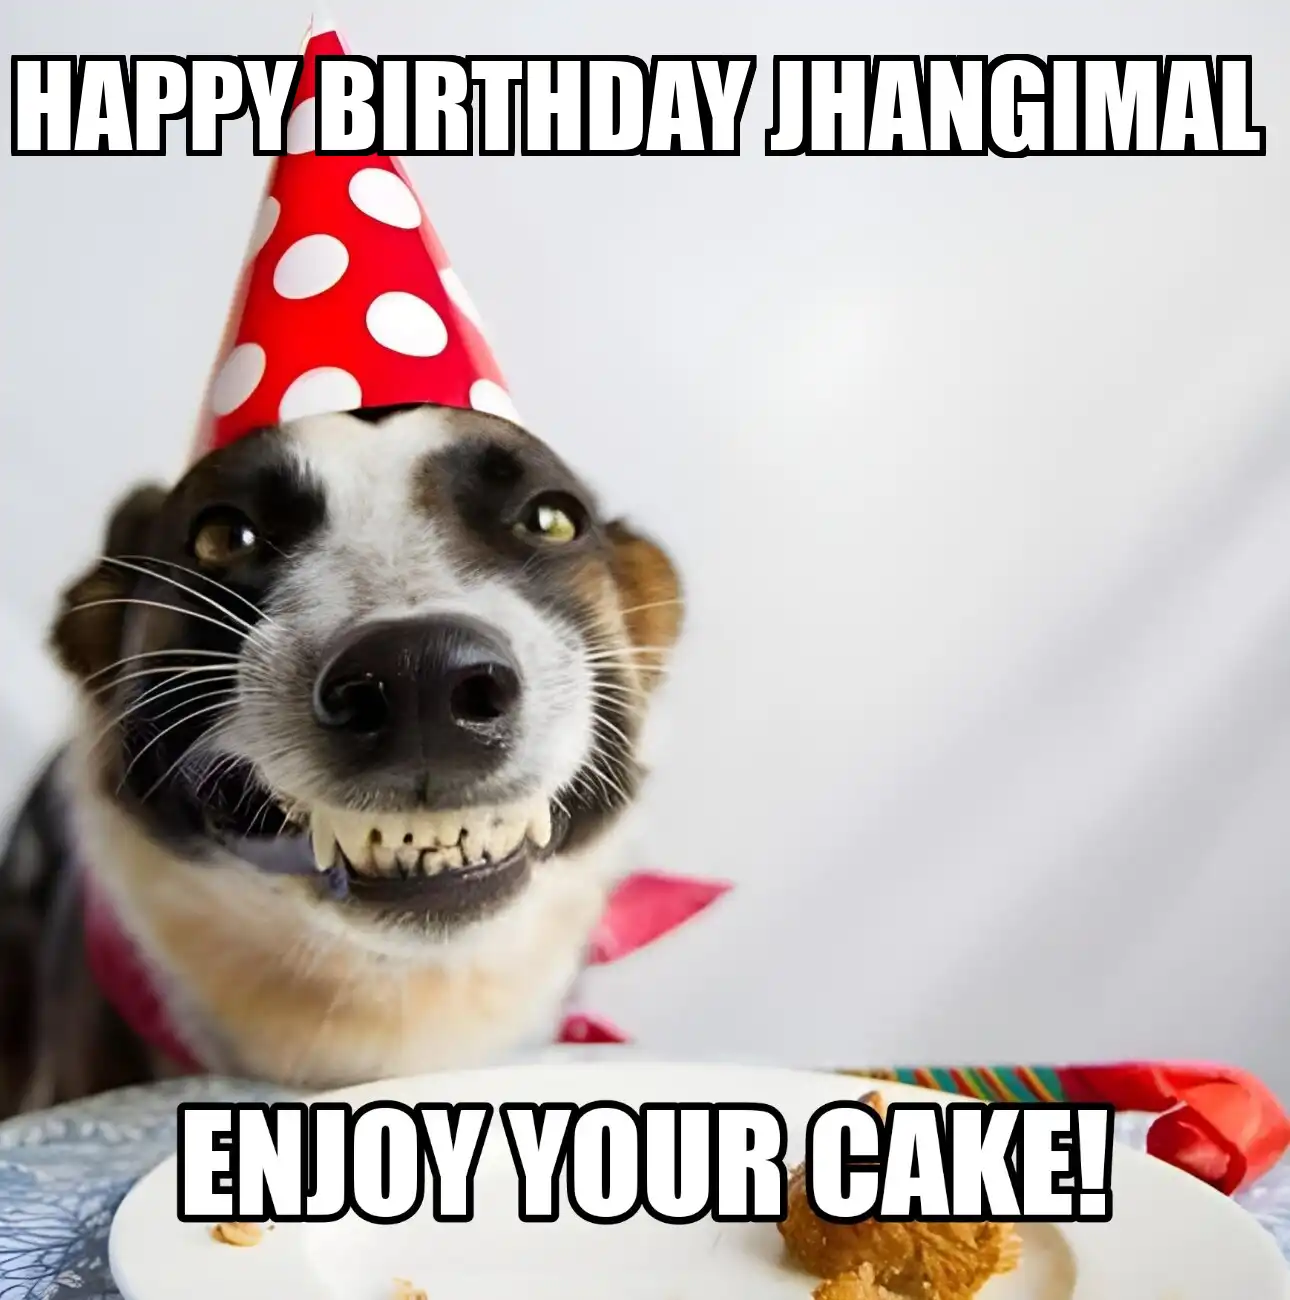 Happy Birthday Jhangimal Enjoy Your Cake Dog Meme